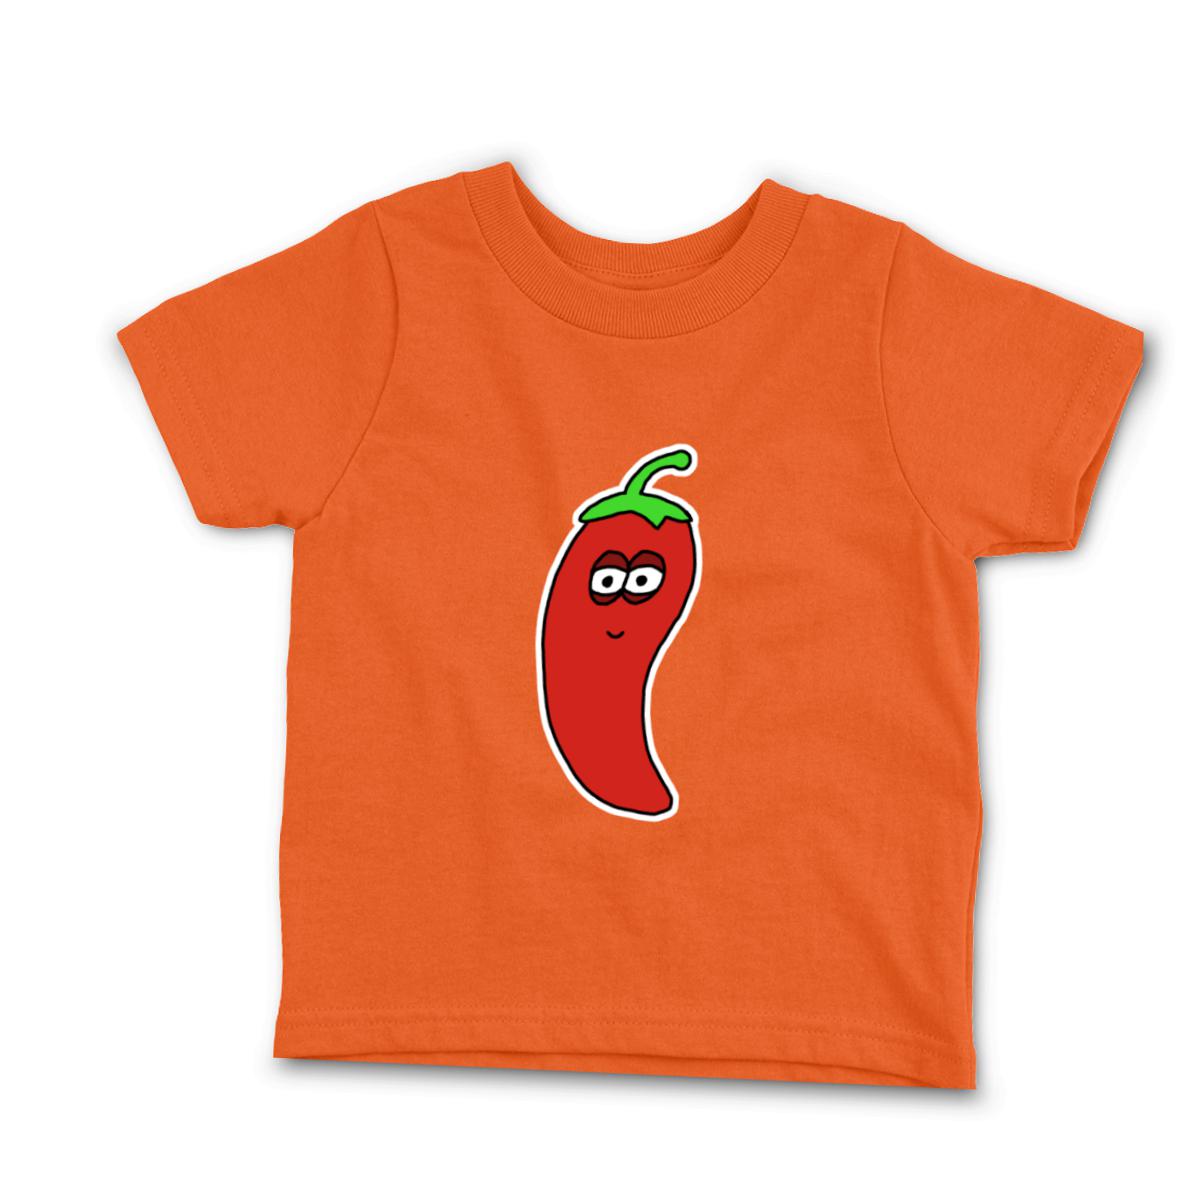 Chili Pepper Toddler Tee 2T orange